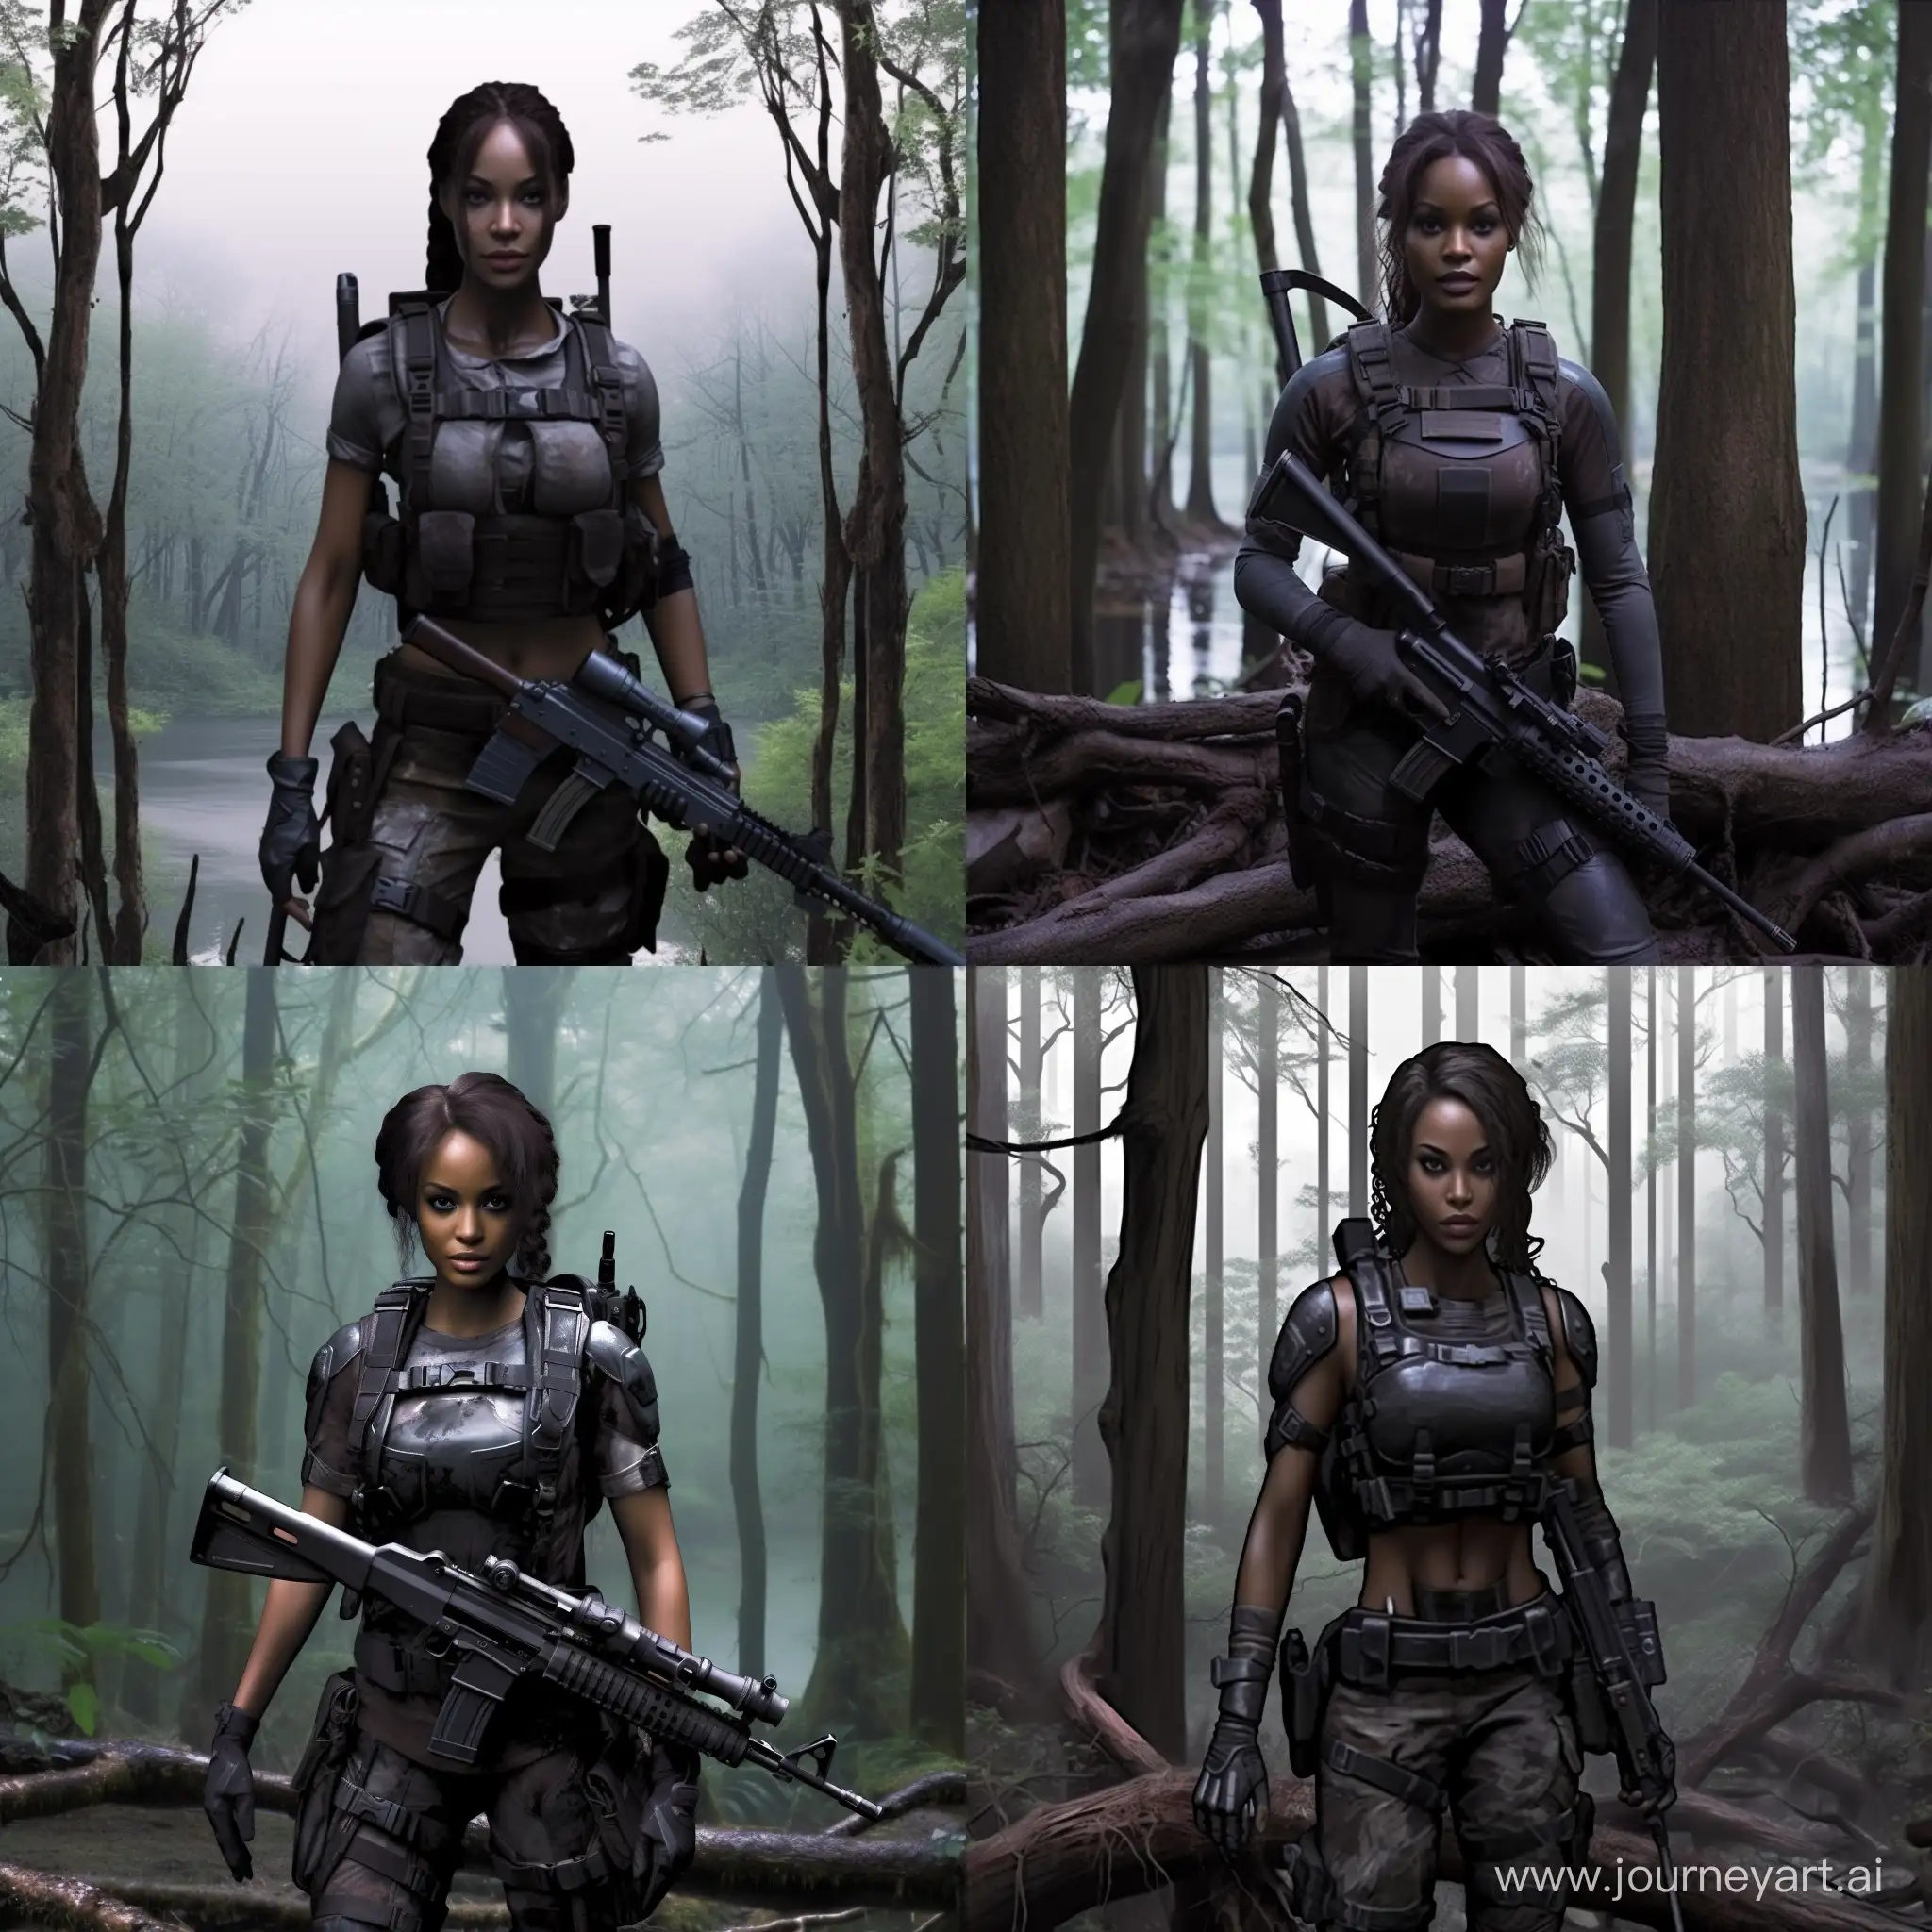 beautiful dark skinned female in S.T.A.L.K.E.R as mercenary in dark tactical bra equipment dead trees dark forest